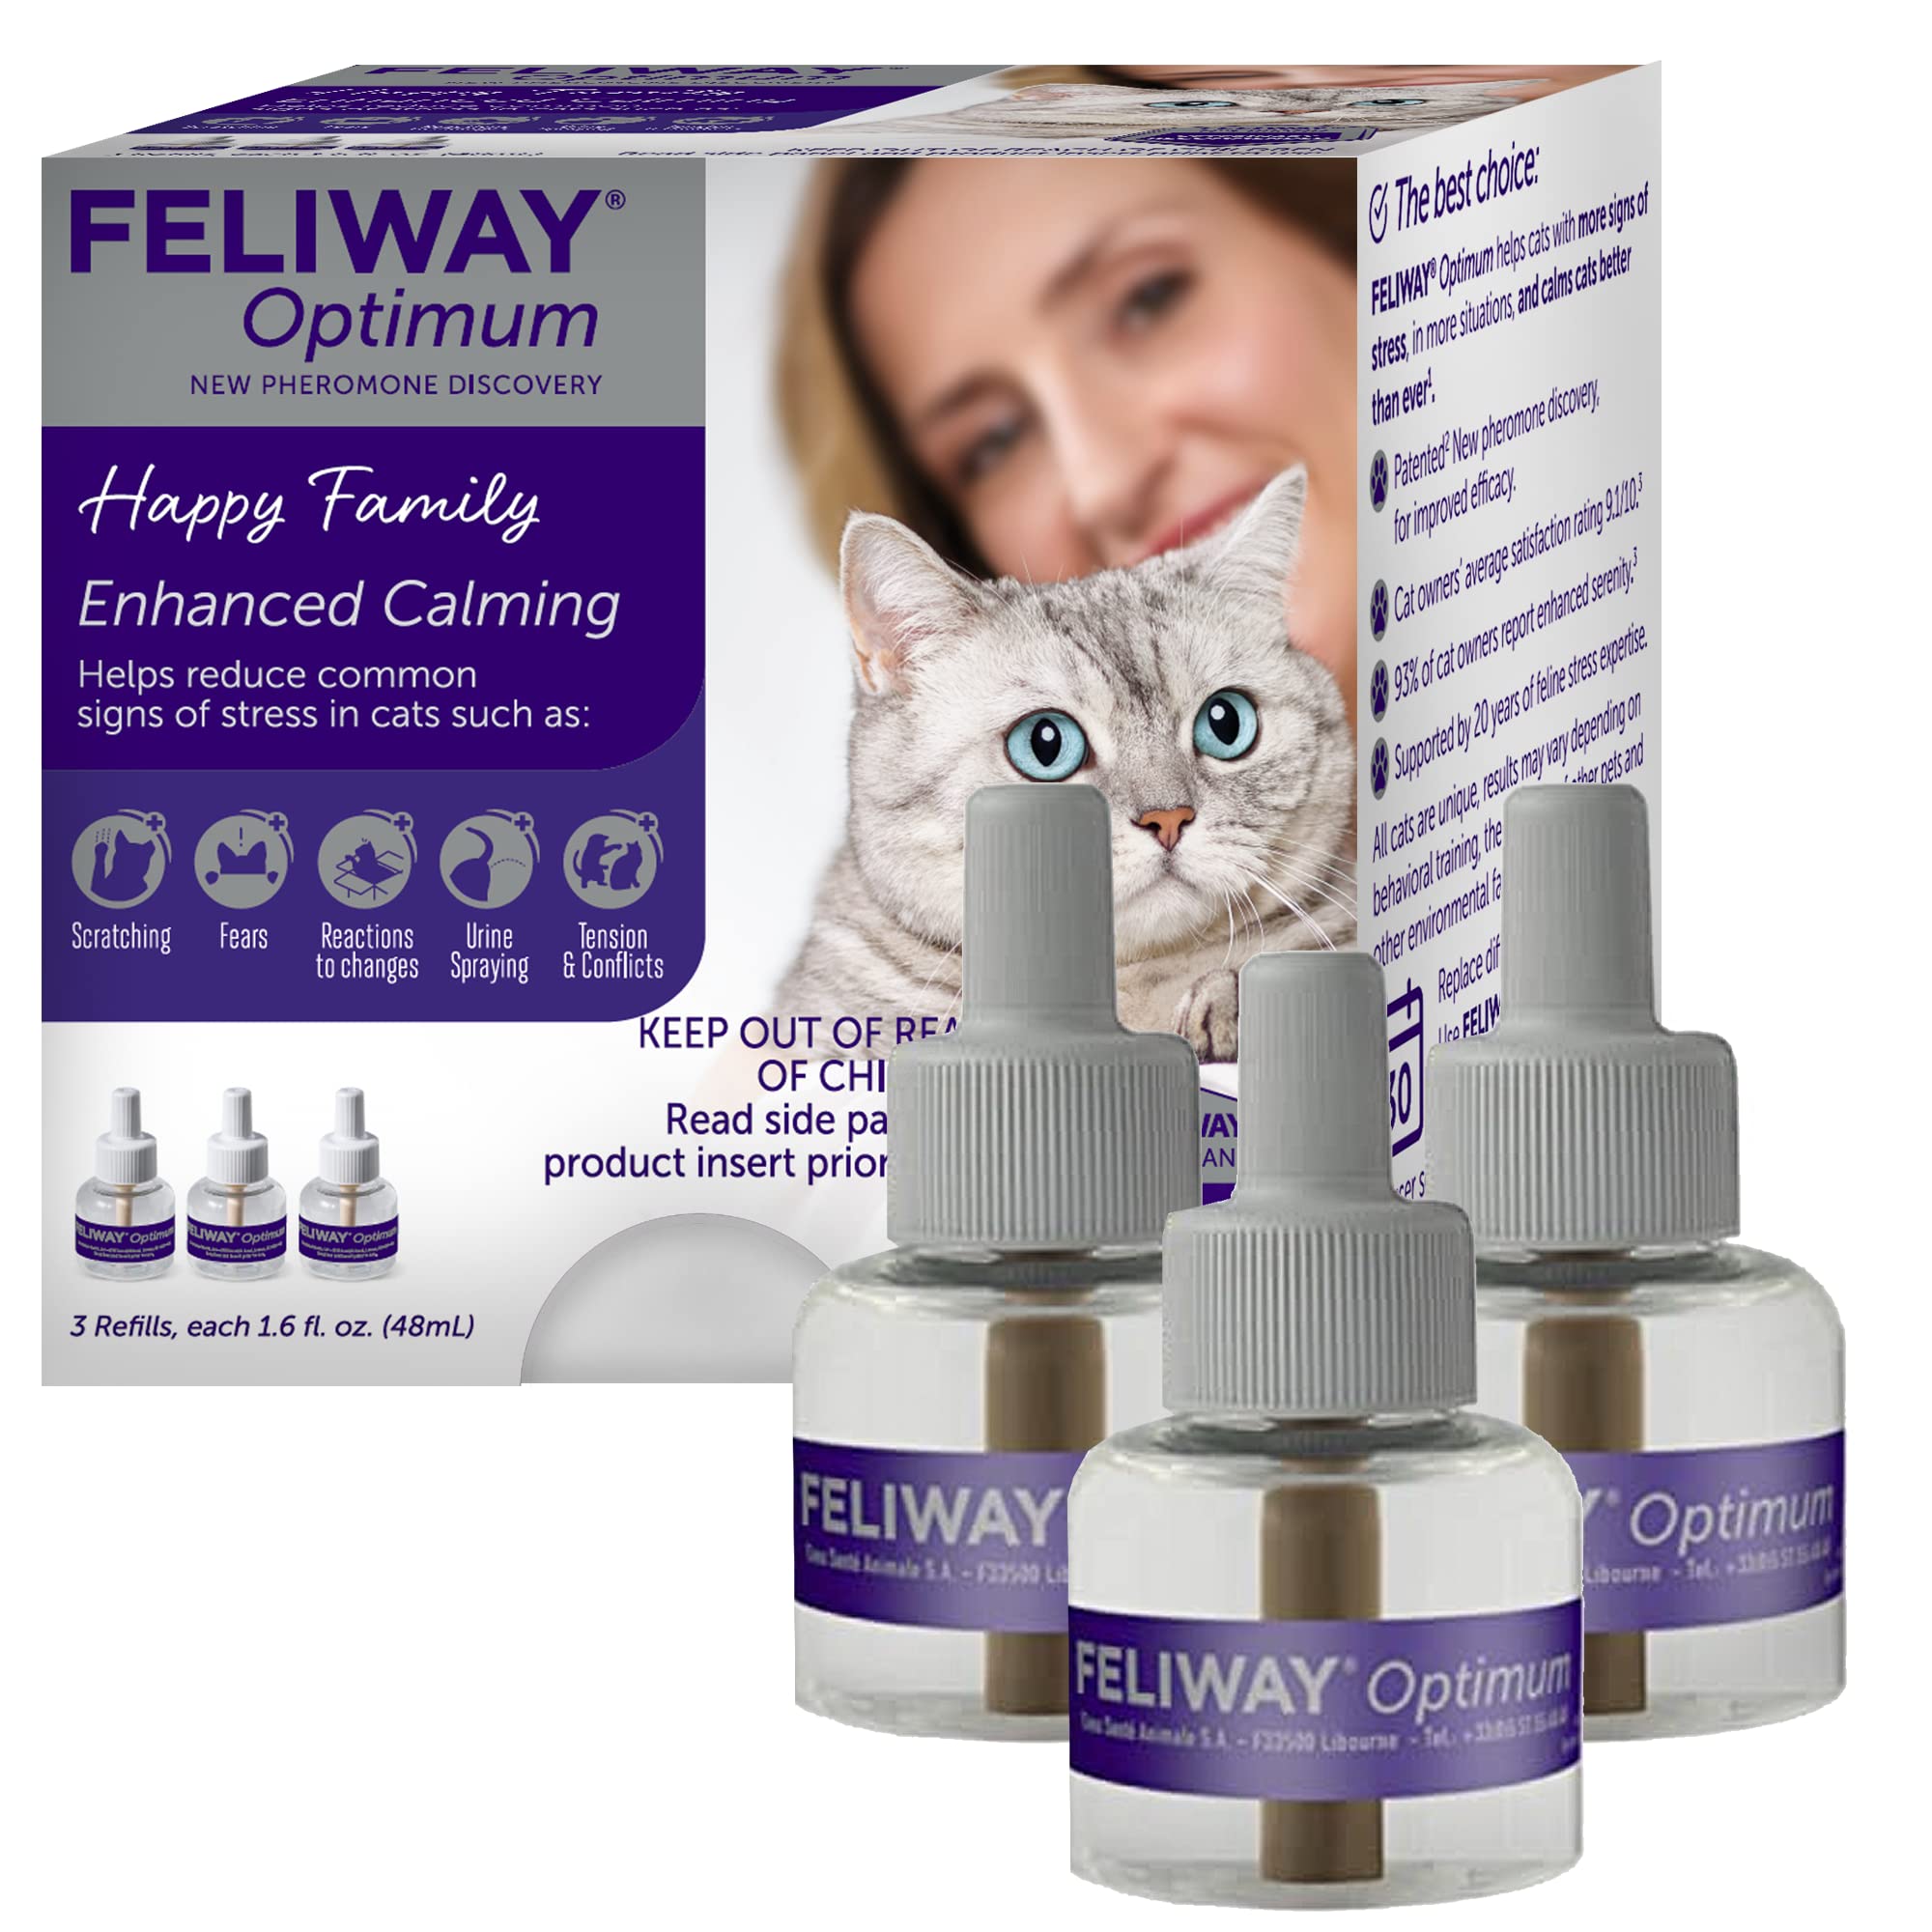 FELIWAY Optimum Cat, Enhanced Calming Pheromone Diffuser, 30 Day Refill